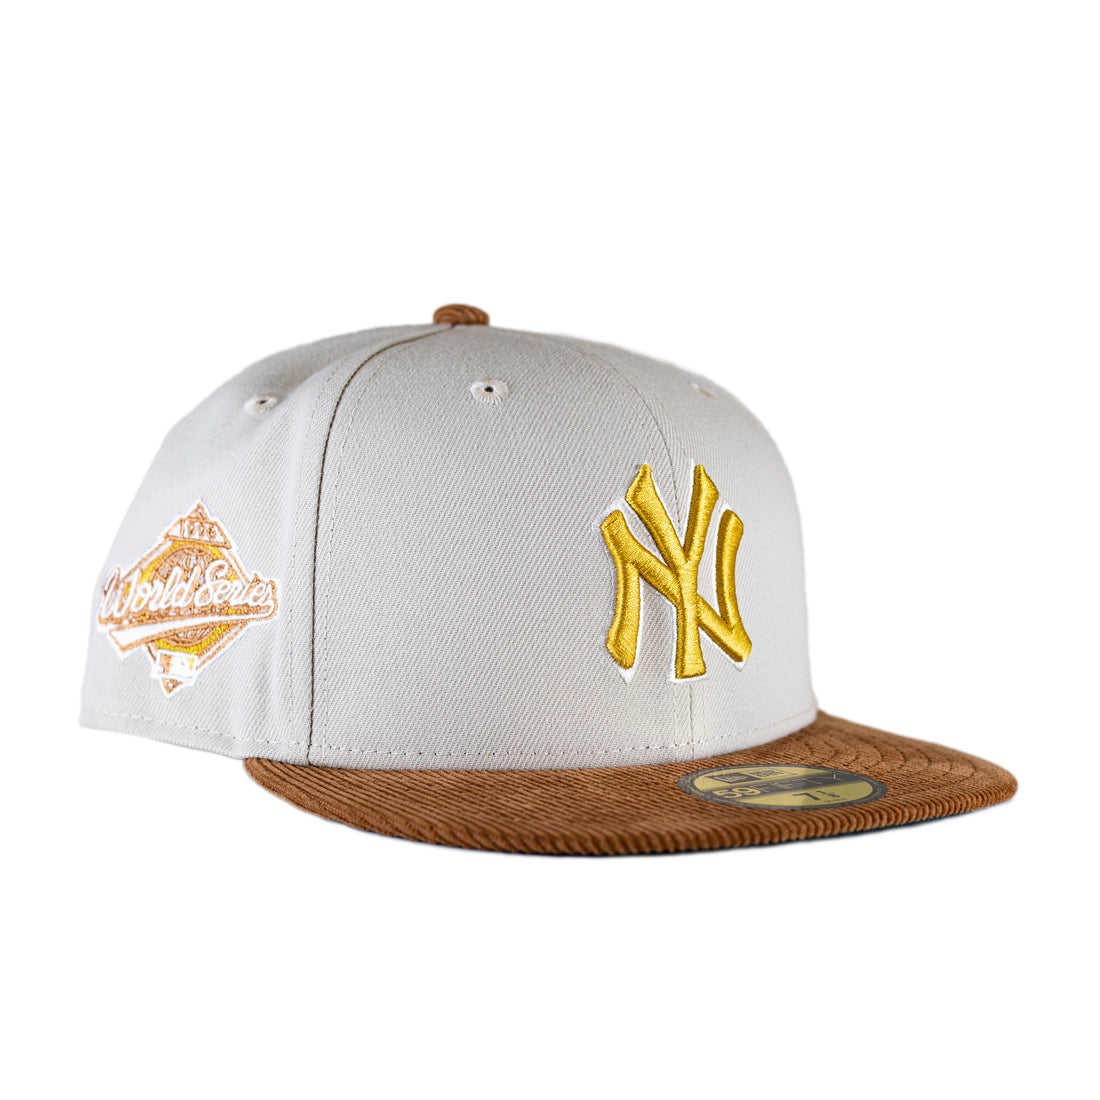 New Era New York Yankees 5950 Corduroy Visor  - Cream/Tan